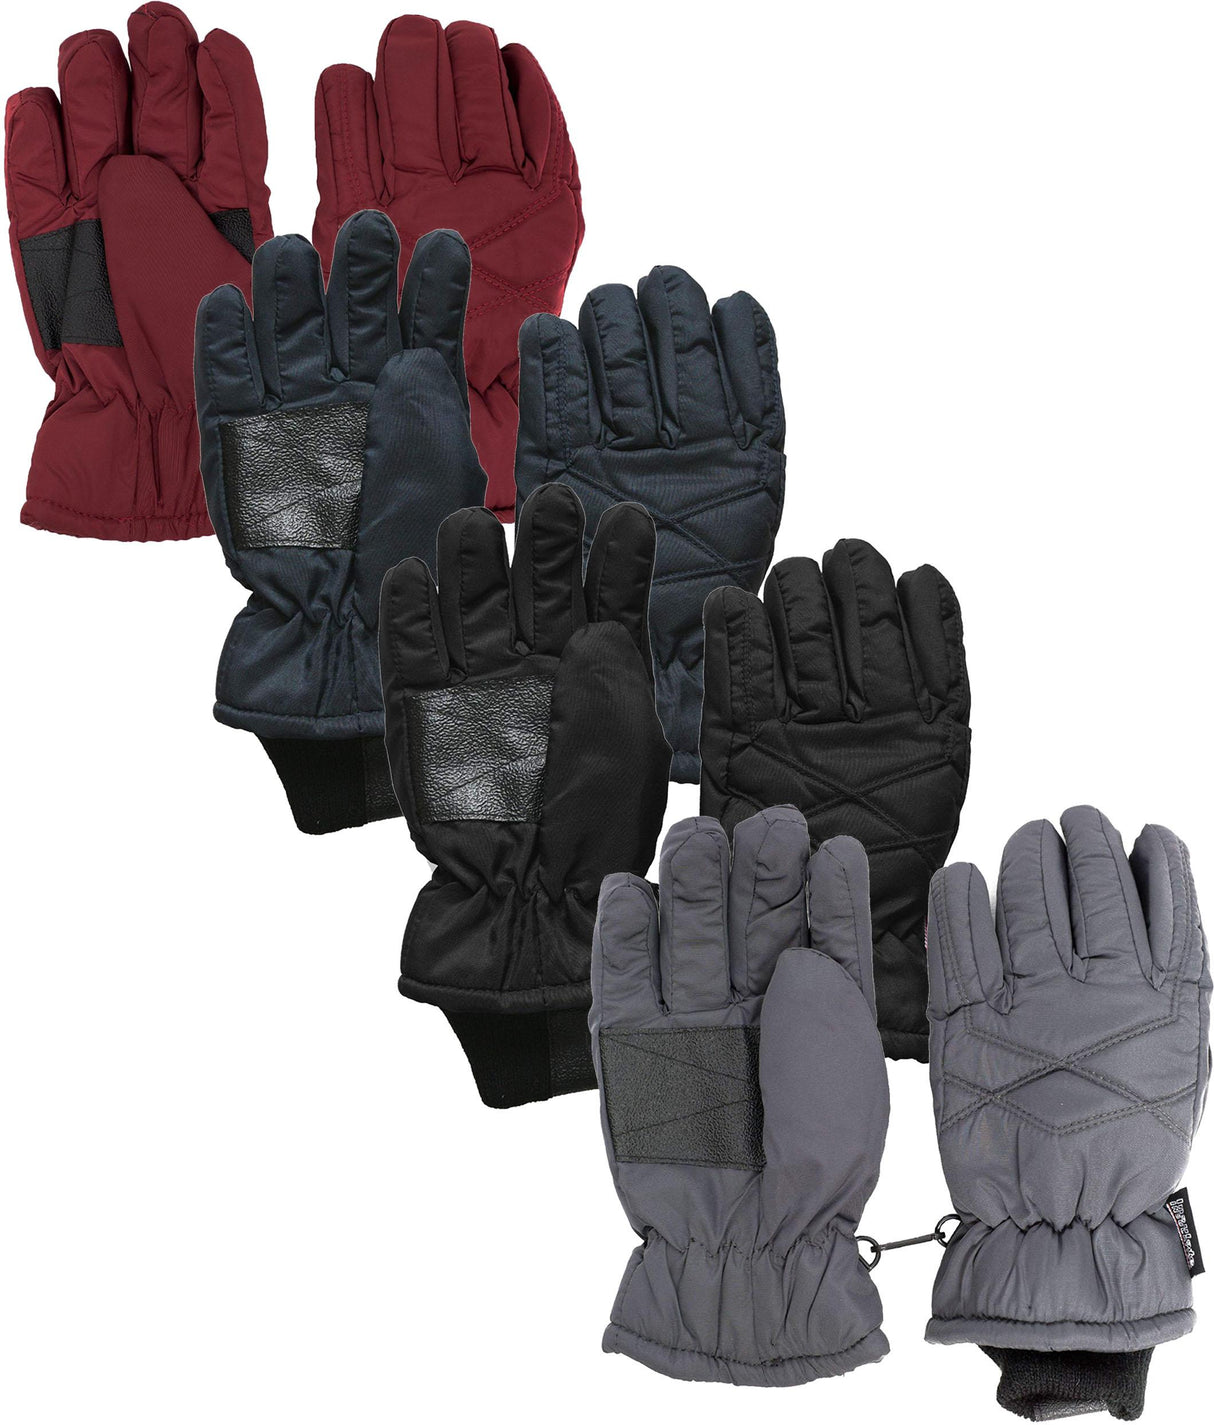 Sanremo Fashions Childrens Unisex Insulated Winter Gloves - 9367